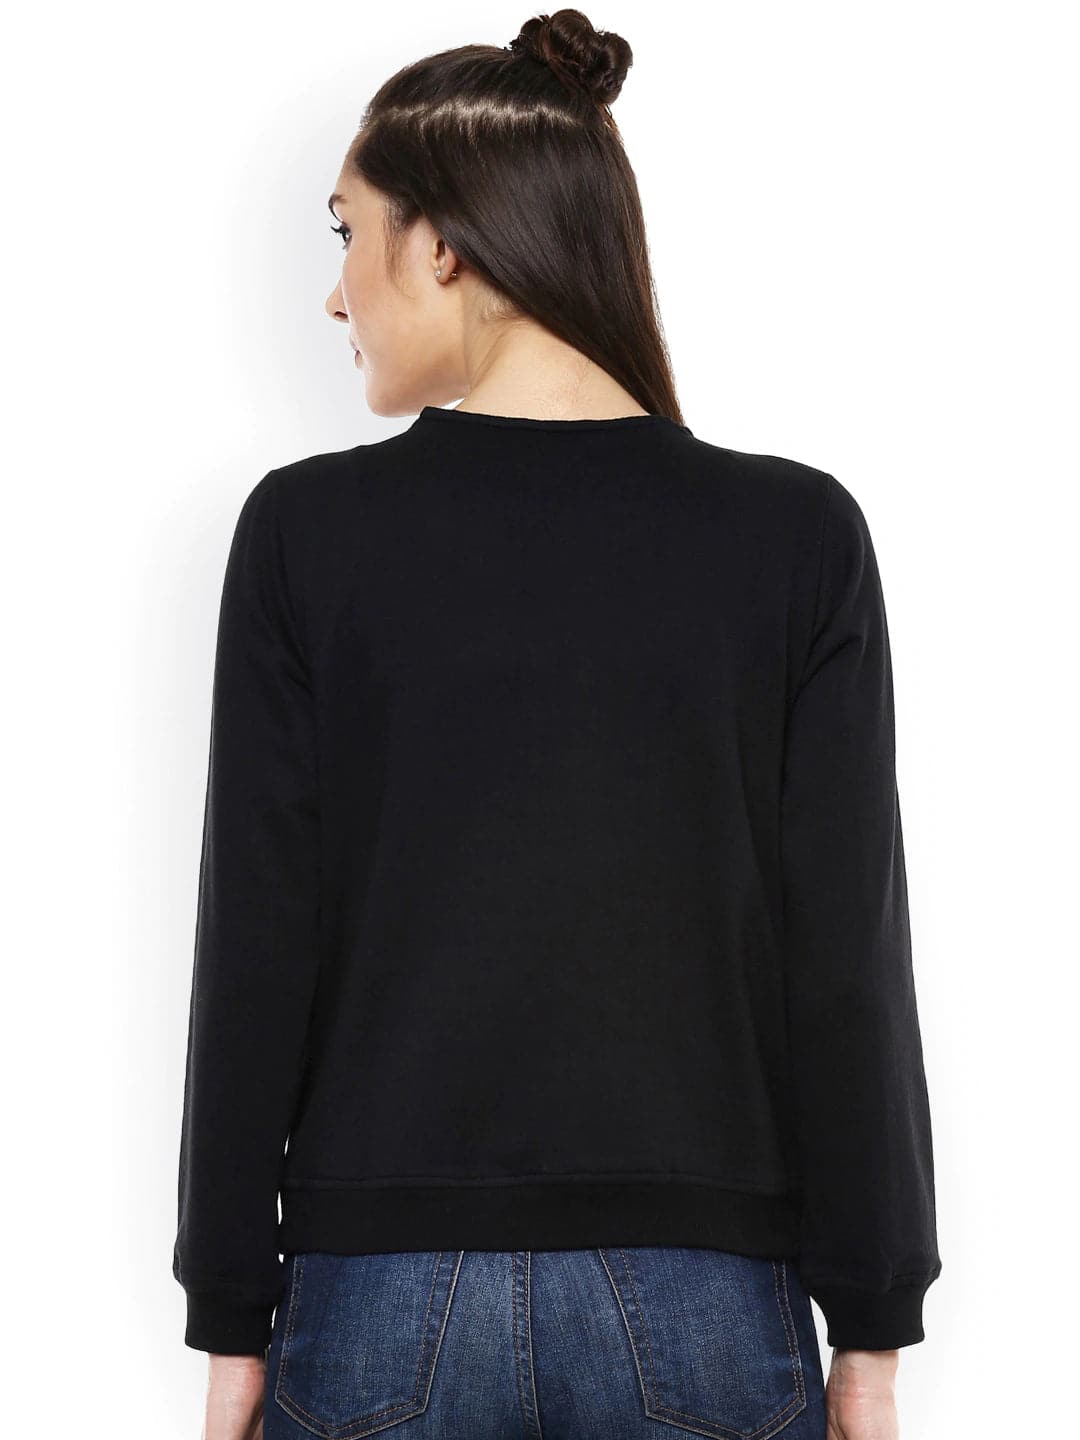 Blingy Neck Black Sweatshirt-Sweatshirts-SASSAFRAS